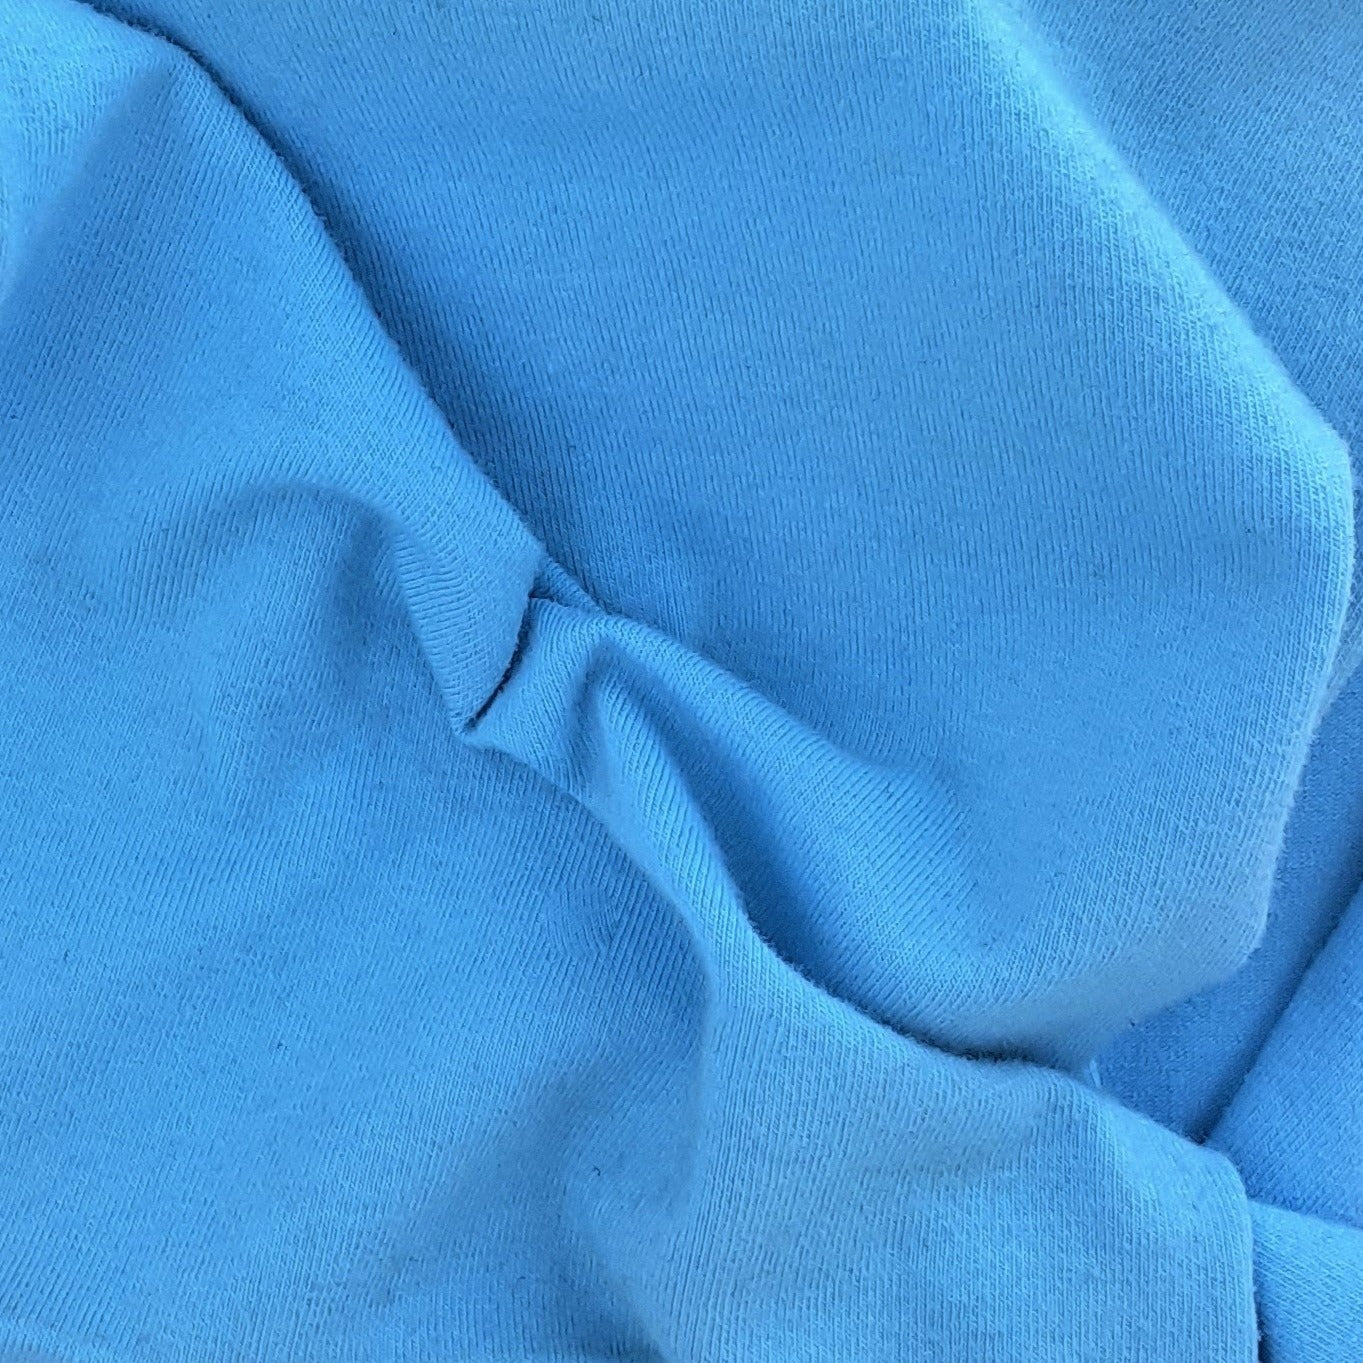 Aqua 10 Ounce Cotton/Spandex Jersey Knit Fabric - SKU 2853A 